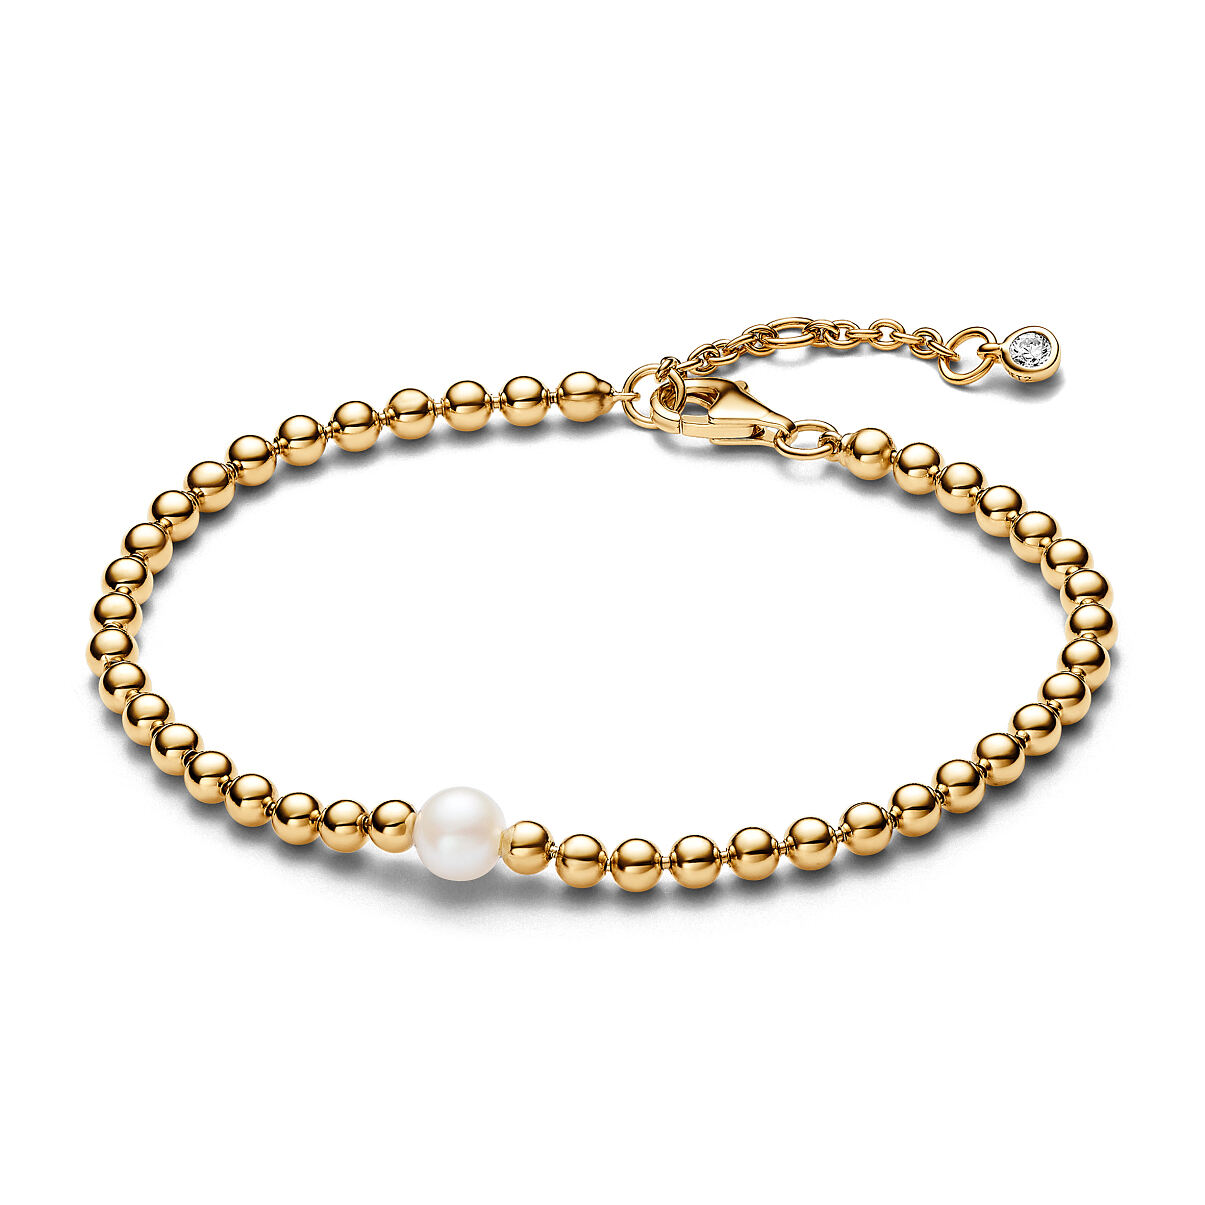 Pandora_Bracelet_14k Gold-plated_Freshwater Pearls_Cubic Zirconia_563173C01_169,00 Euro (3)